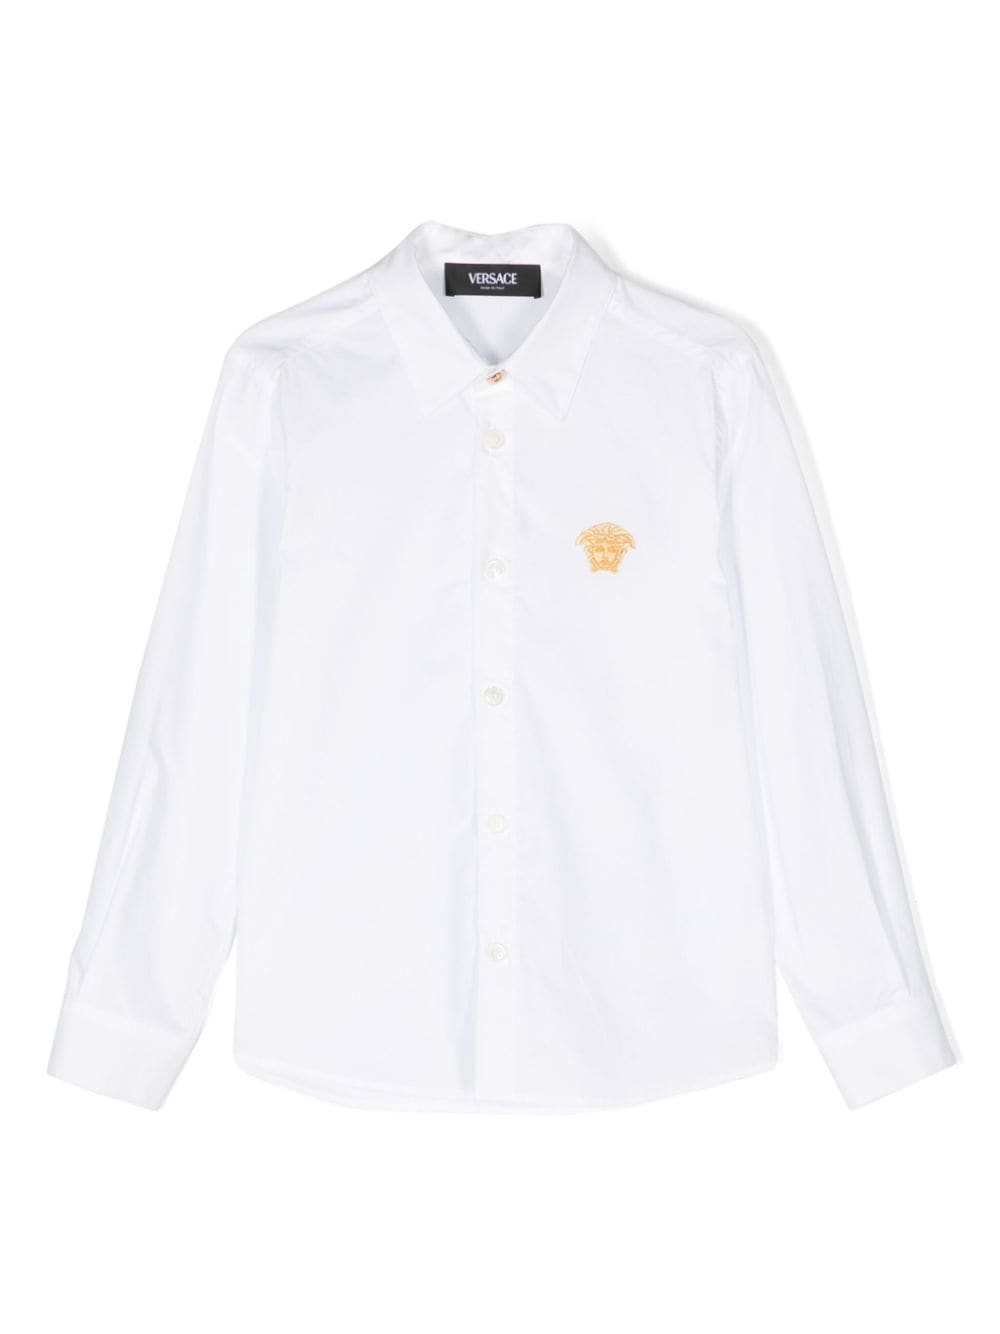 Camicia bianca per bambino con logo